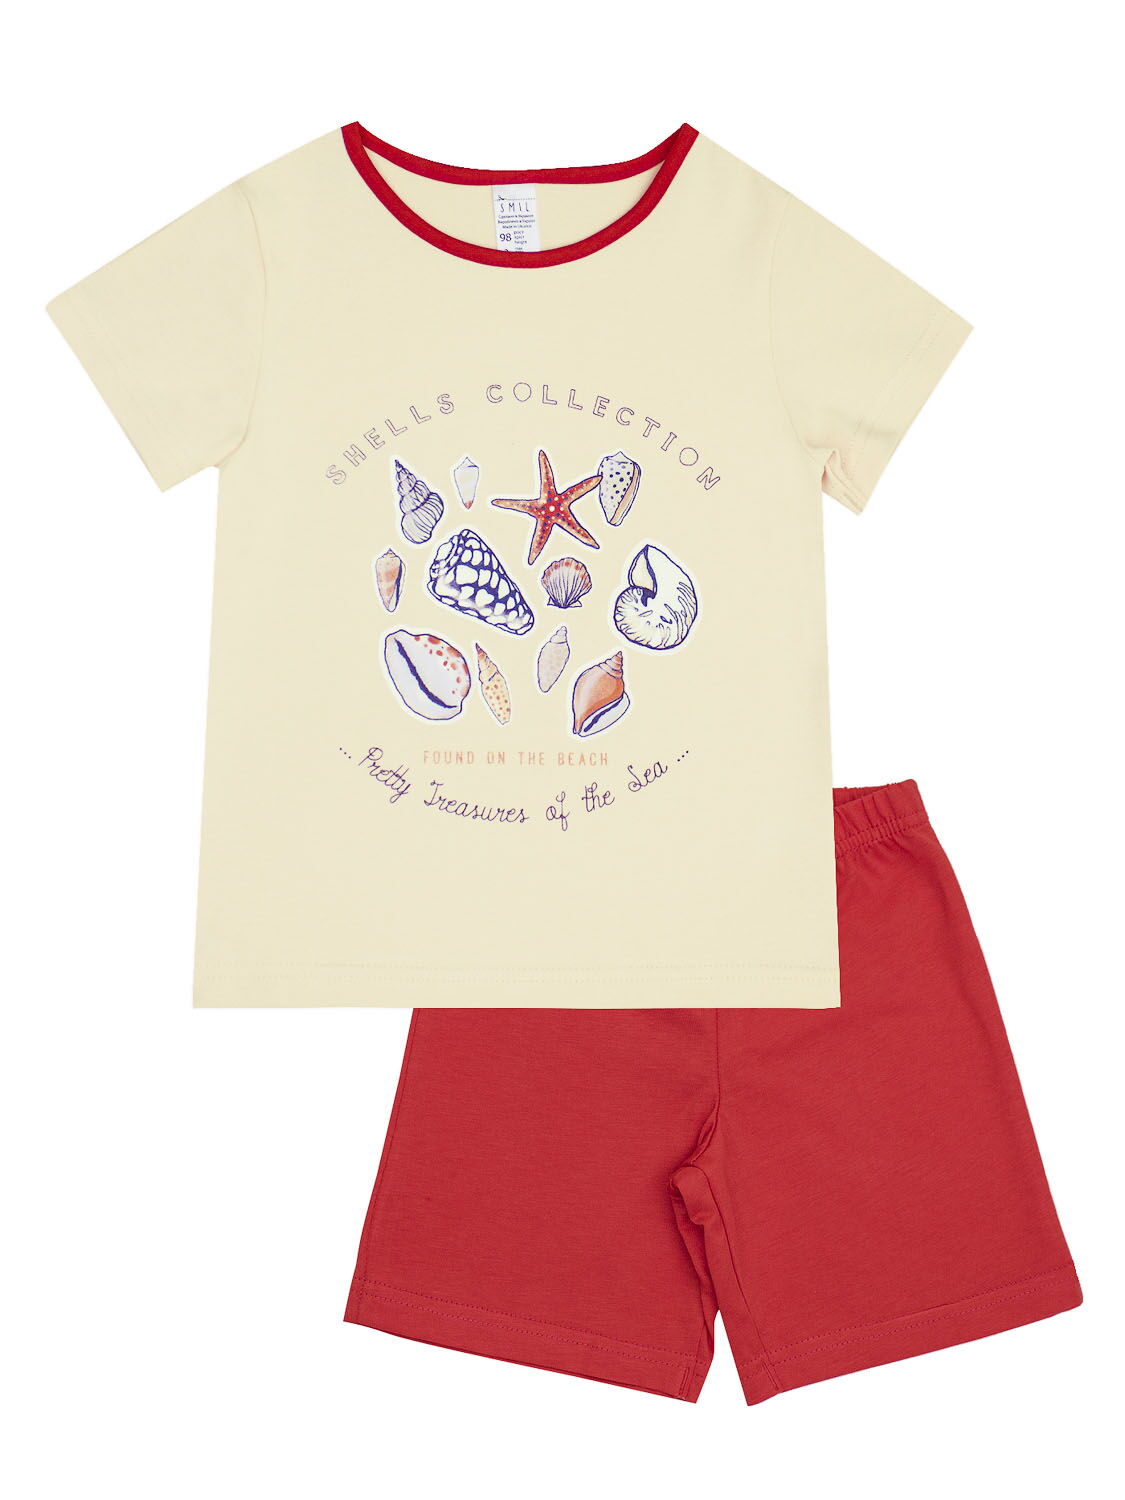 Пижама для девочки (футболка+шорты) SMIL кремовая 104390 - цена